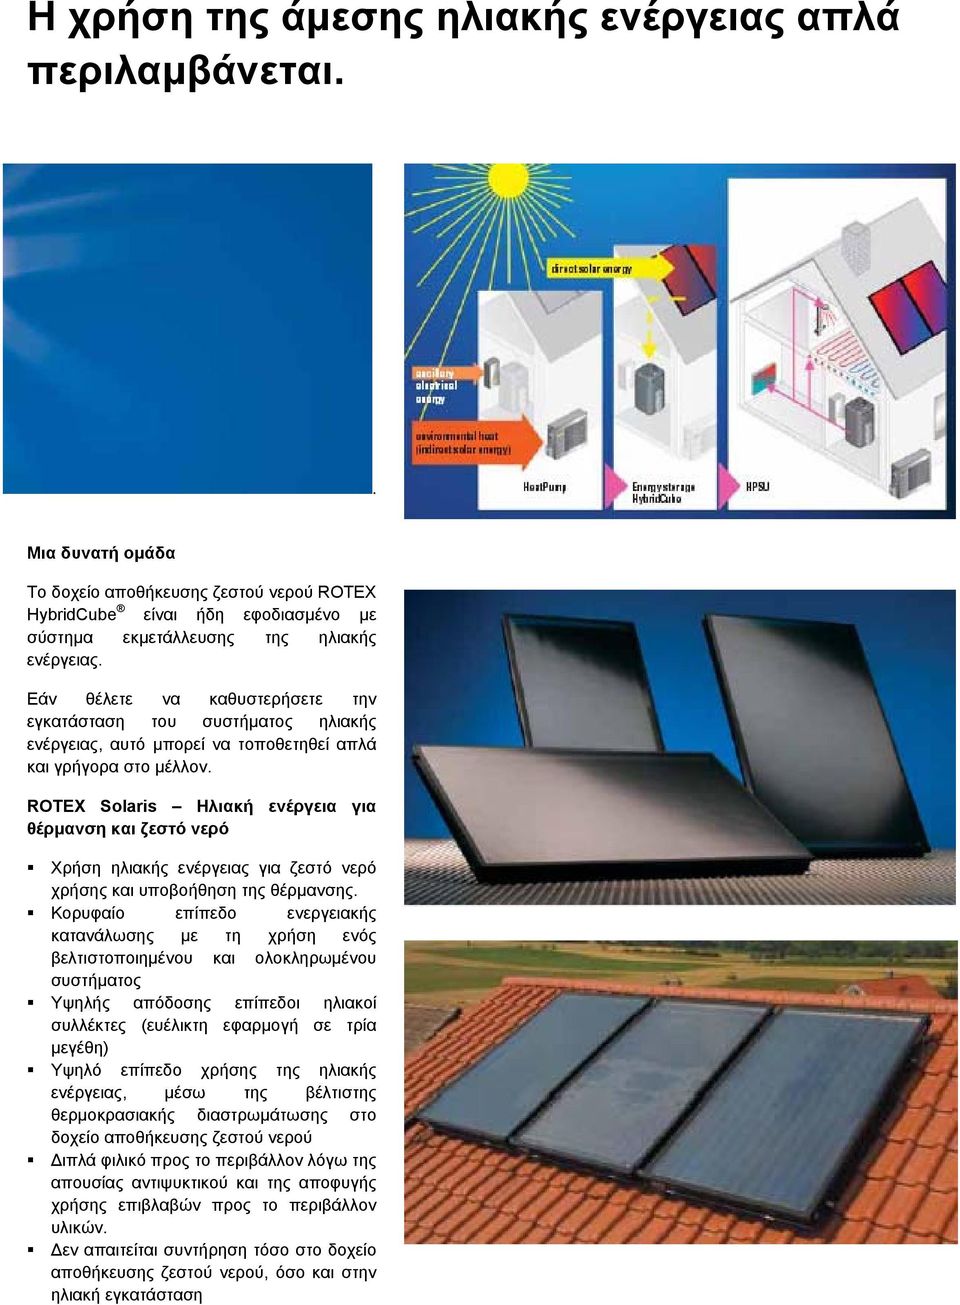 ROTEX Solaris Ηλιακή ενέργεια για θέρμανση και ζεστό νερό Χρήση ηλιακής ενέργειας για ζεστό νερό χρήσης και υποβοήθηση της θέρμανσης.